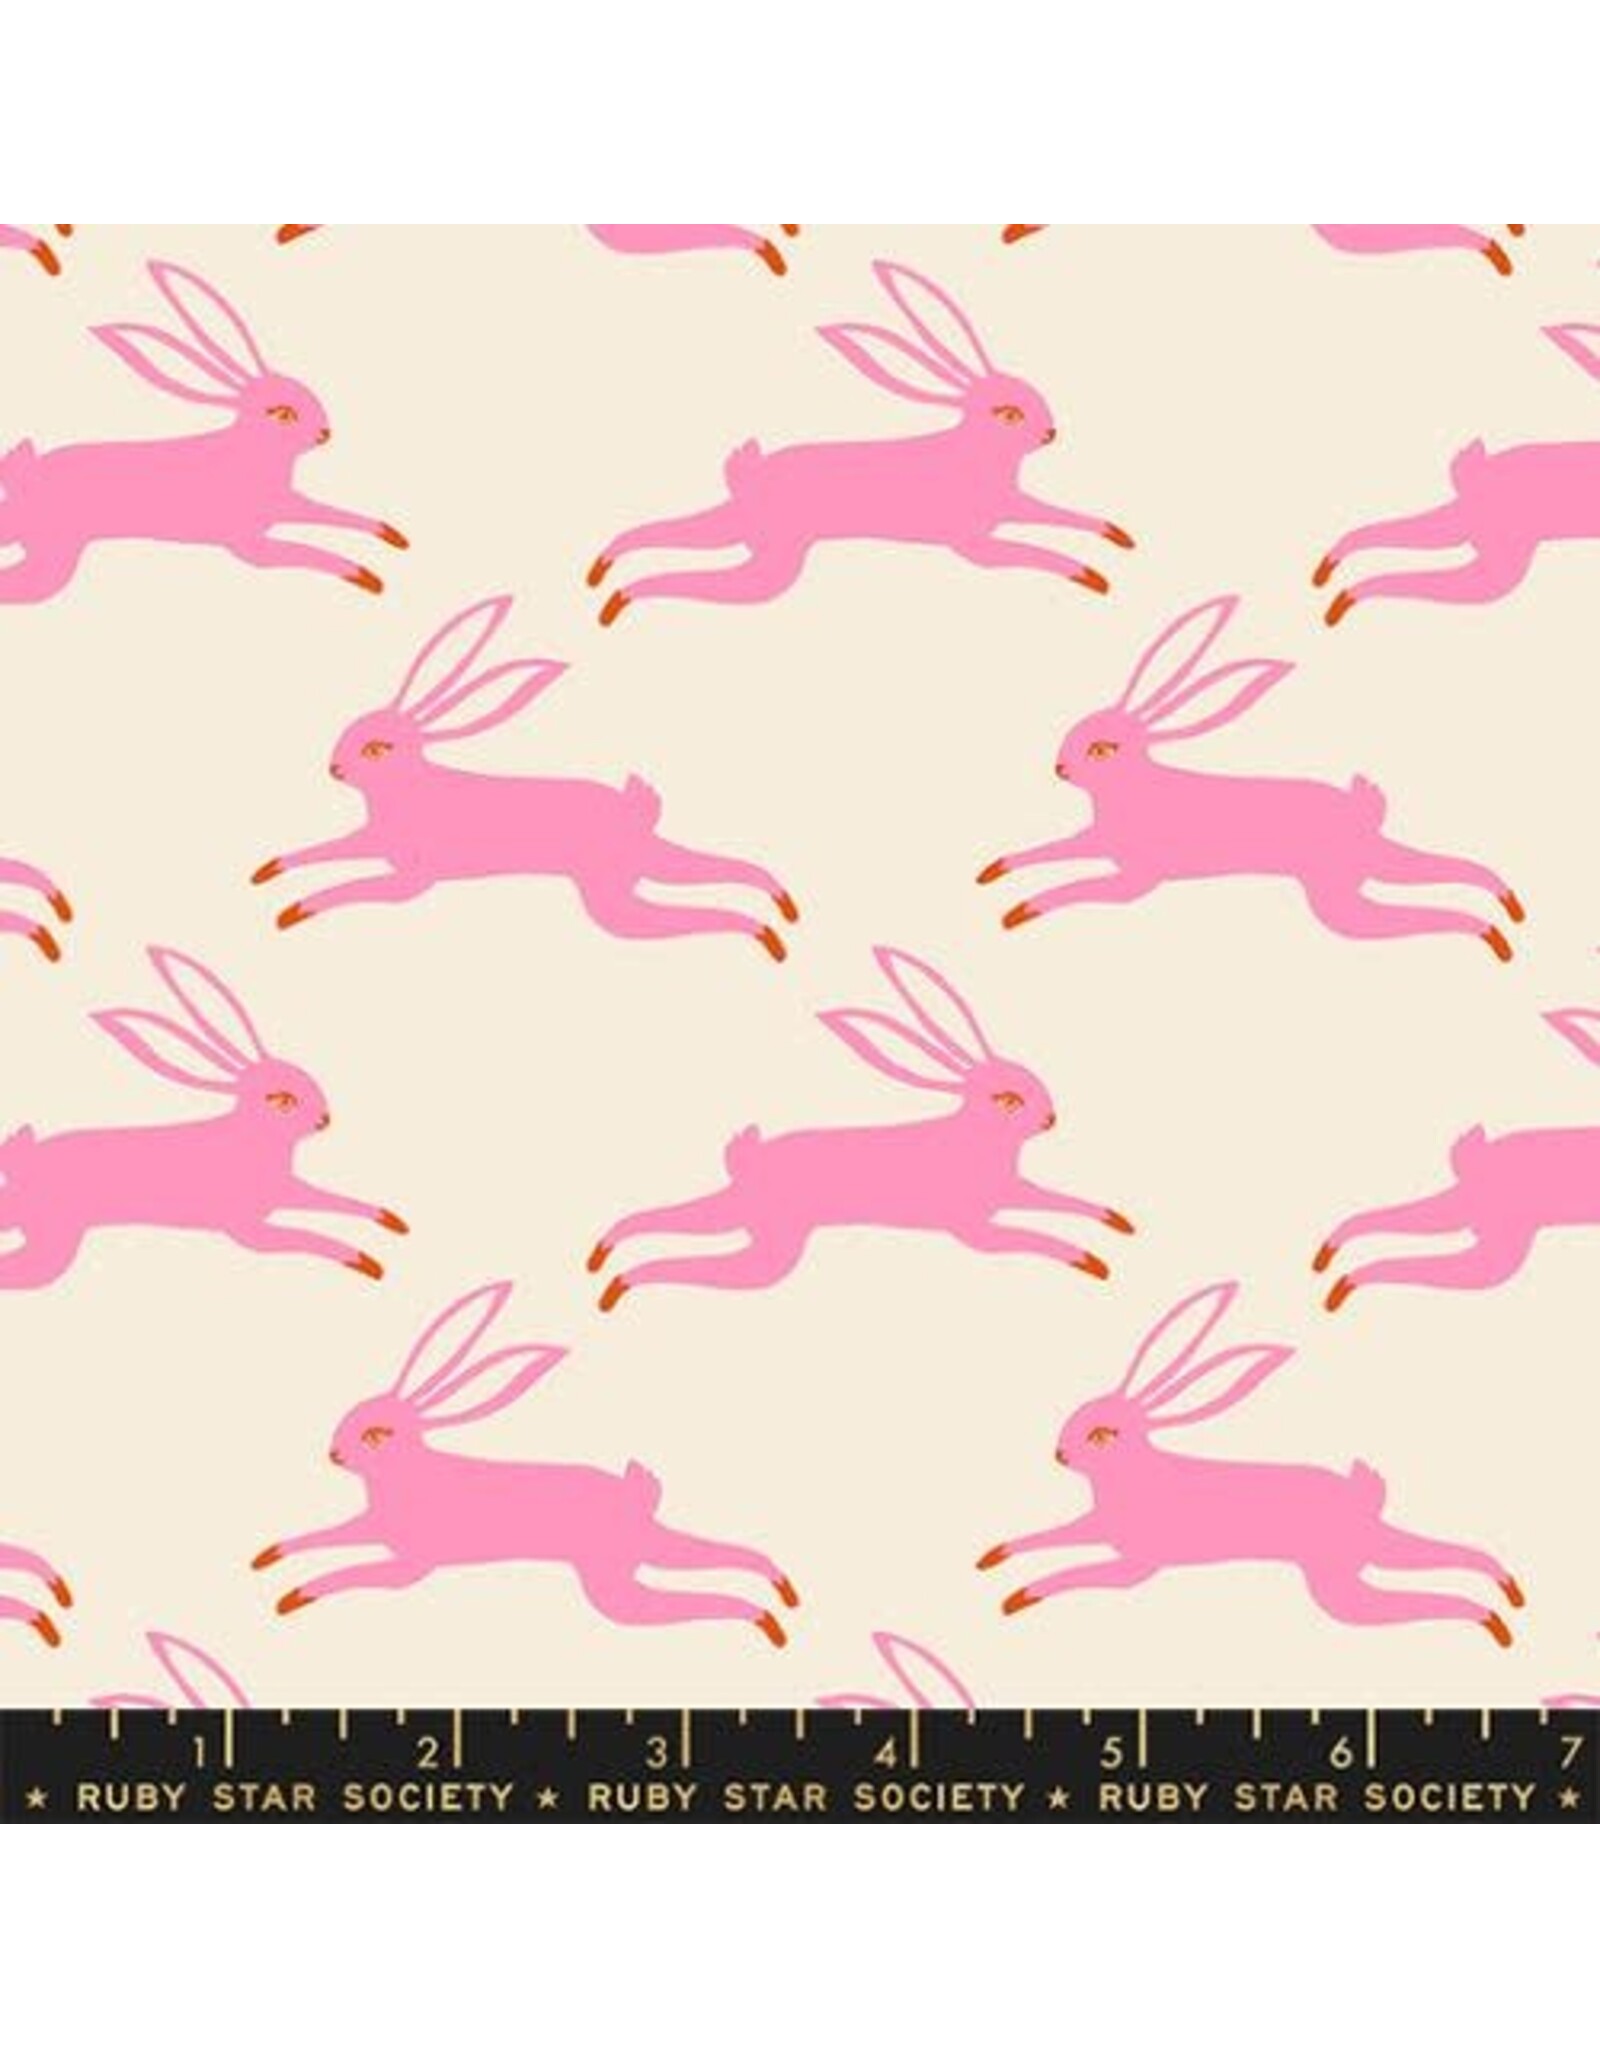 Ruby Star Society Sarah Watts - Backyard - Bunny Run Flamingo - RS208711